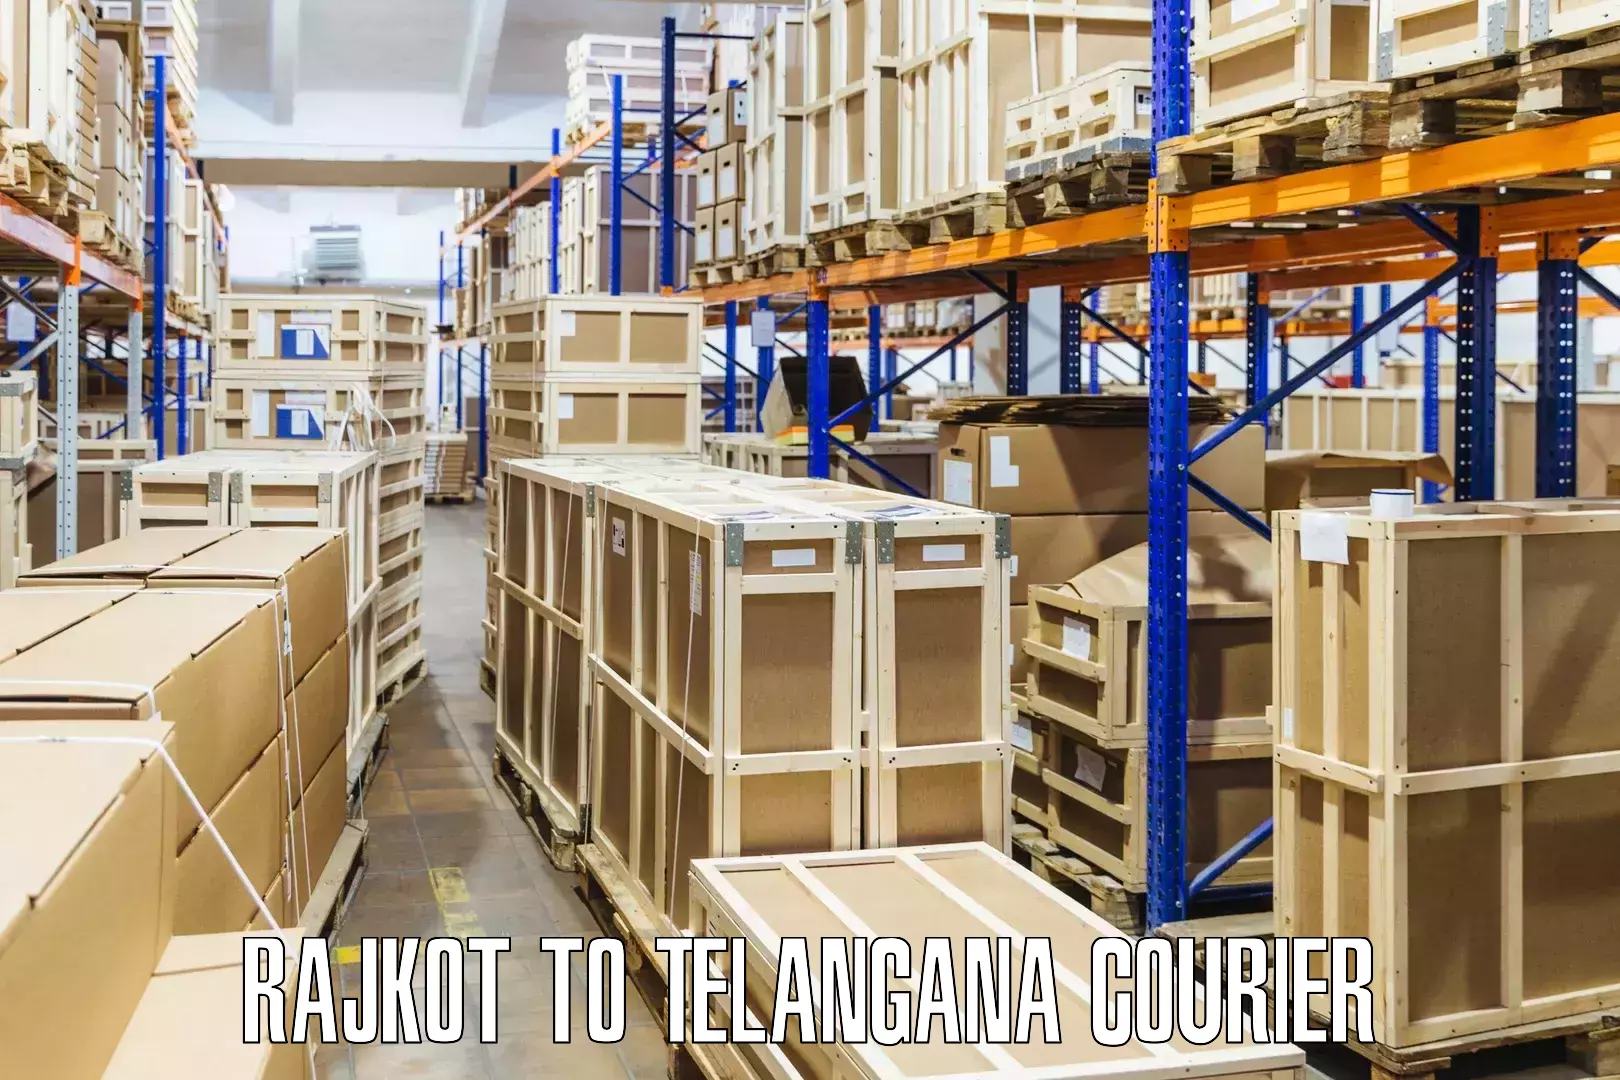 Global logistics network Rajkot to Alair